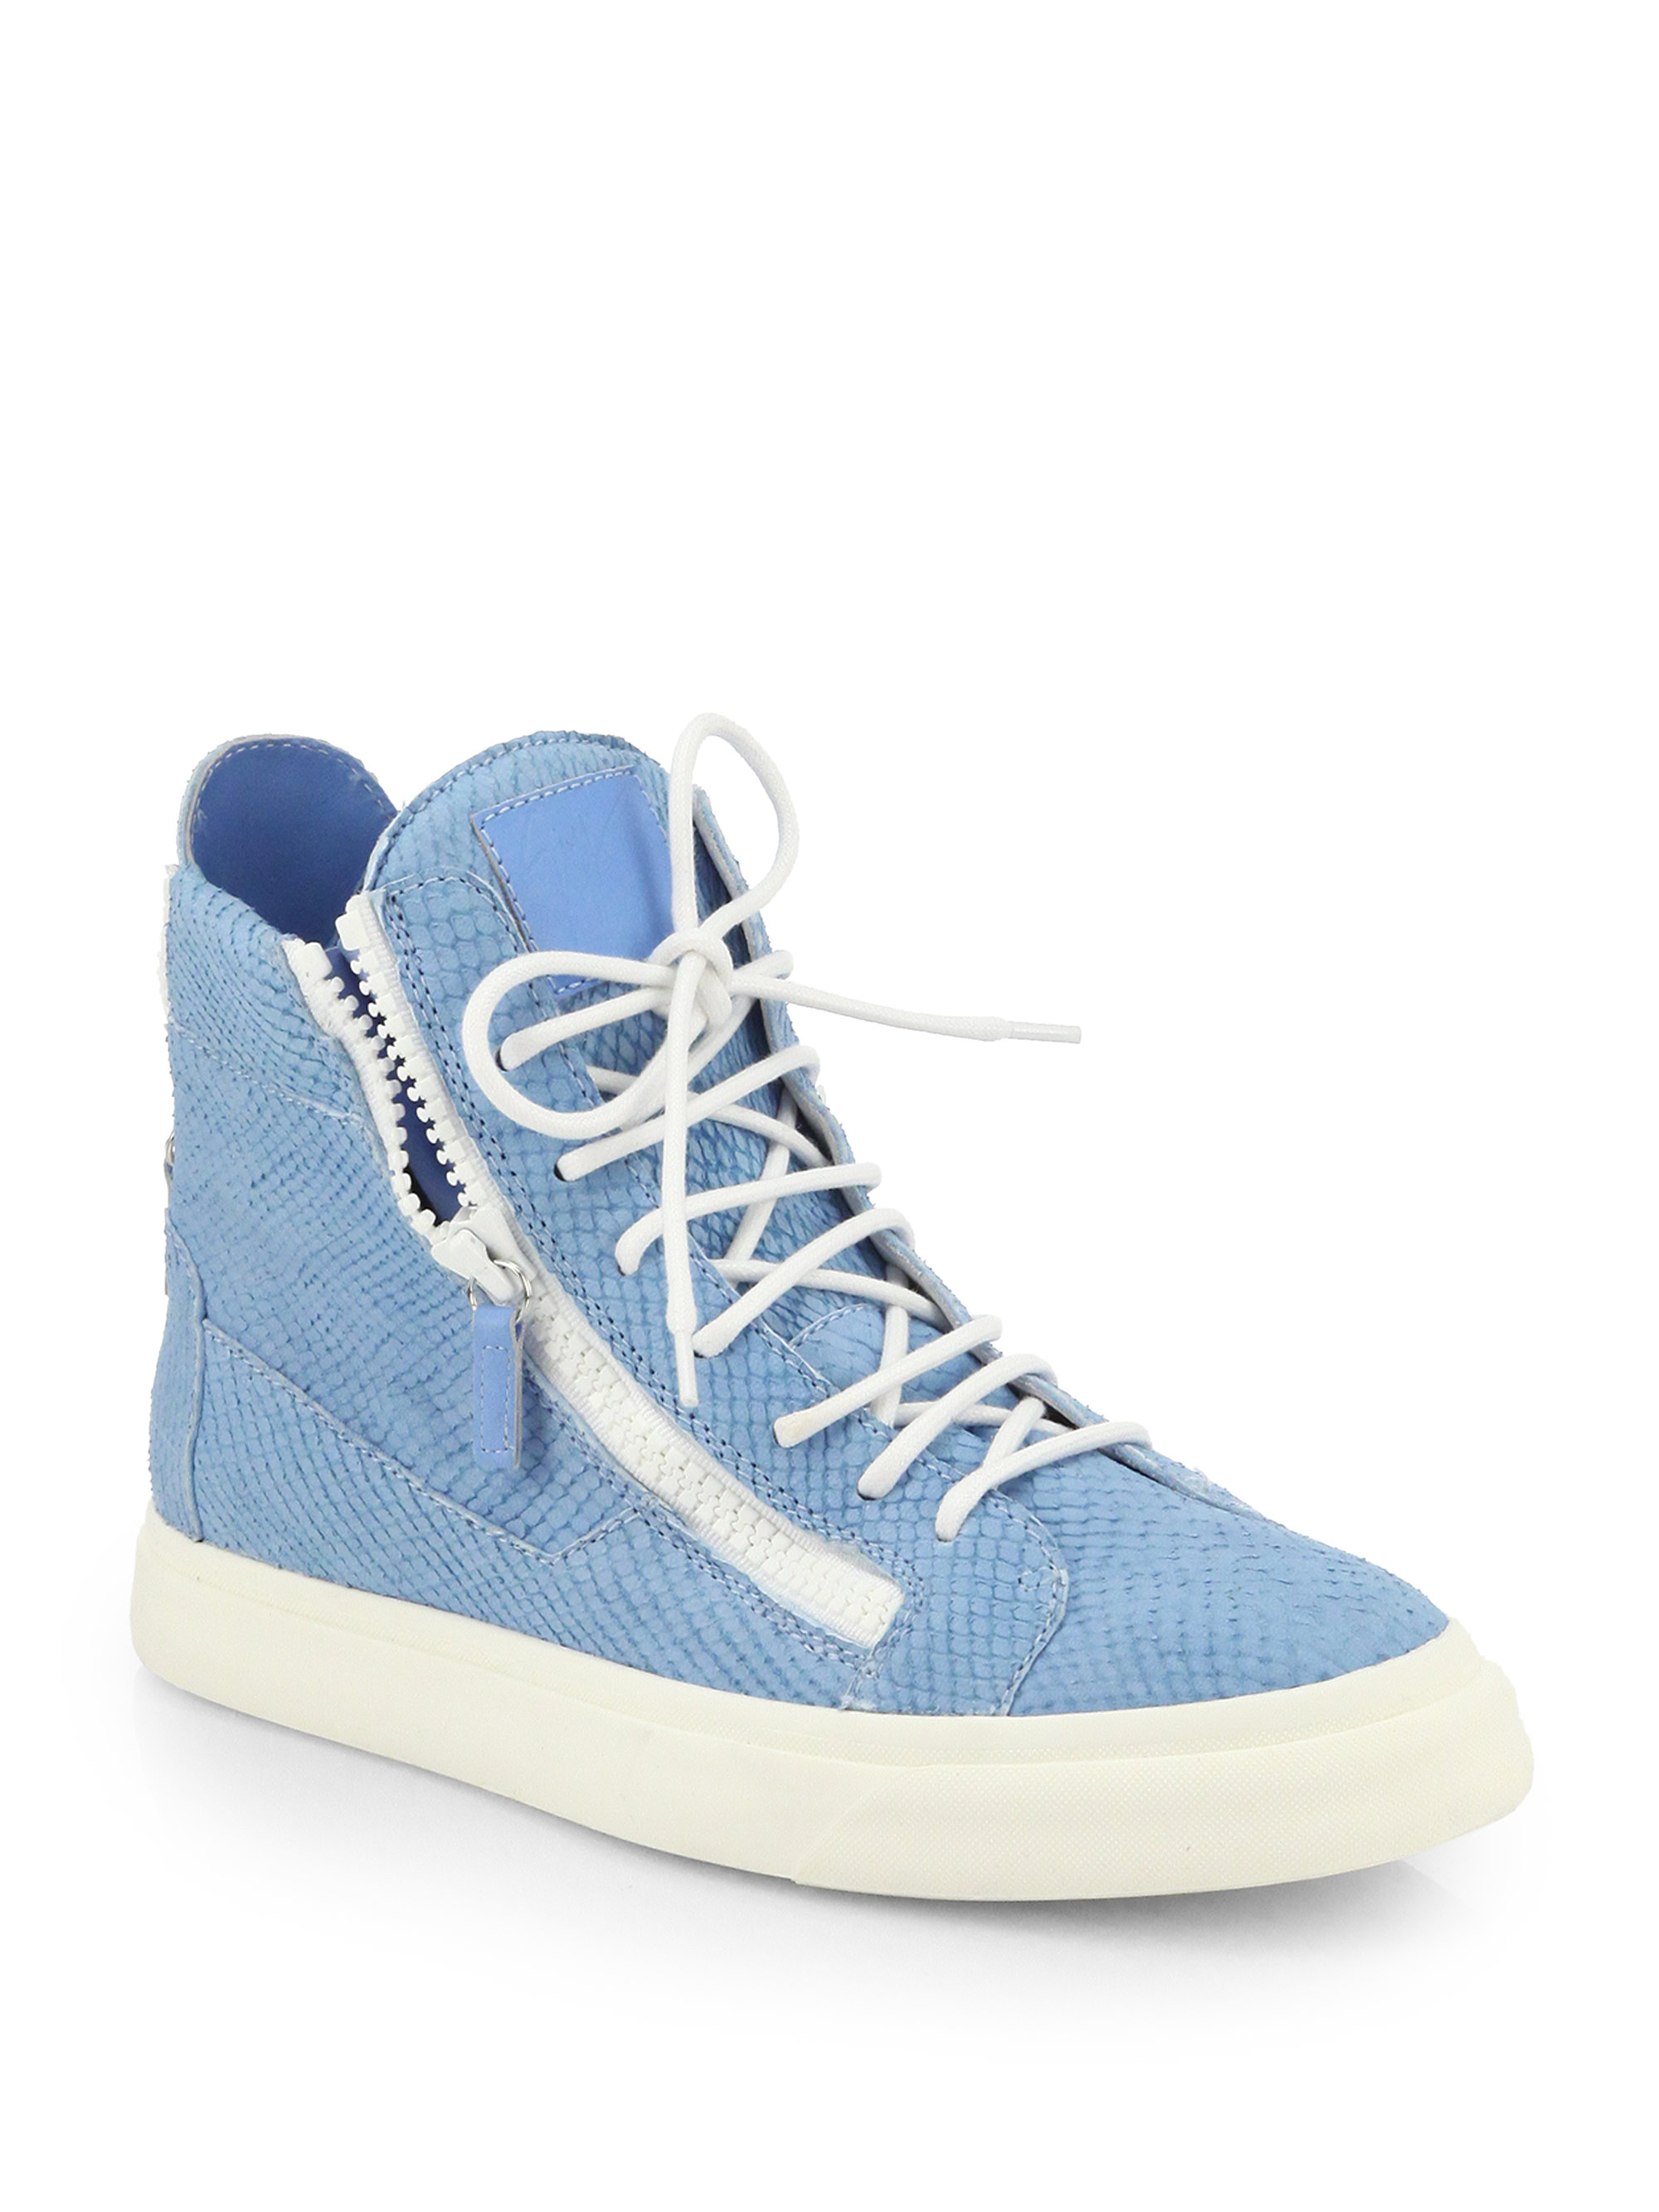 Giuseppe Zanotti Snakeskin-Embossed Leather High-Top Sneakers in Blue ...